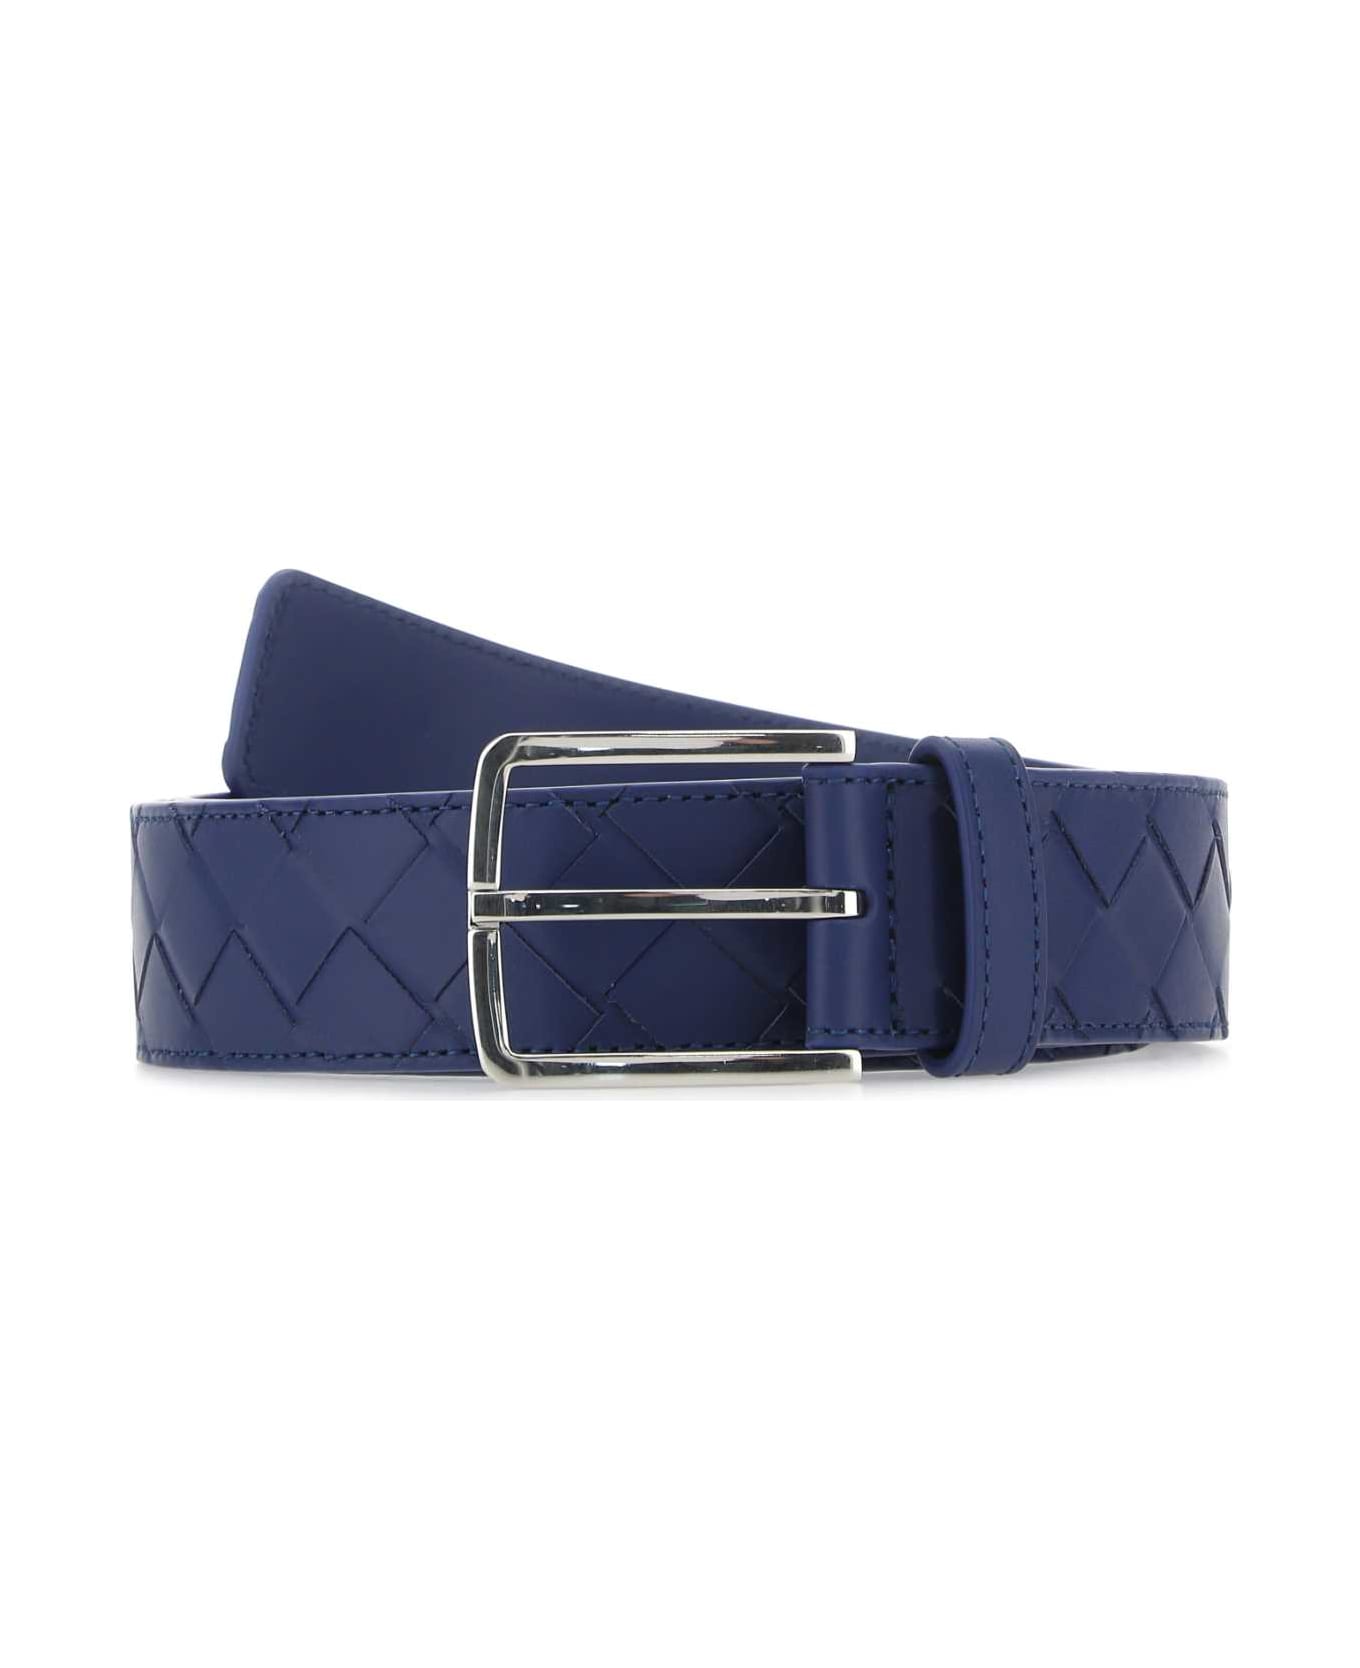 Bottega Veneta Navy Blue Leather Belt - 4102 ベルト